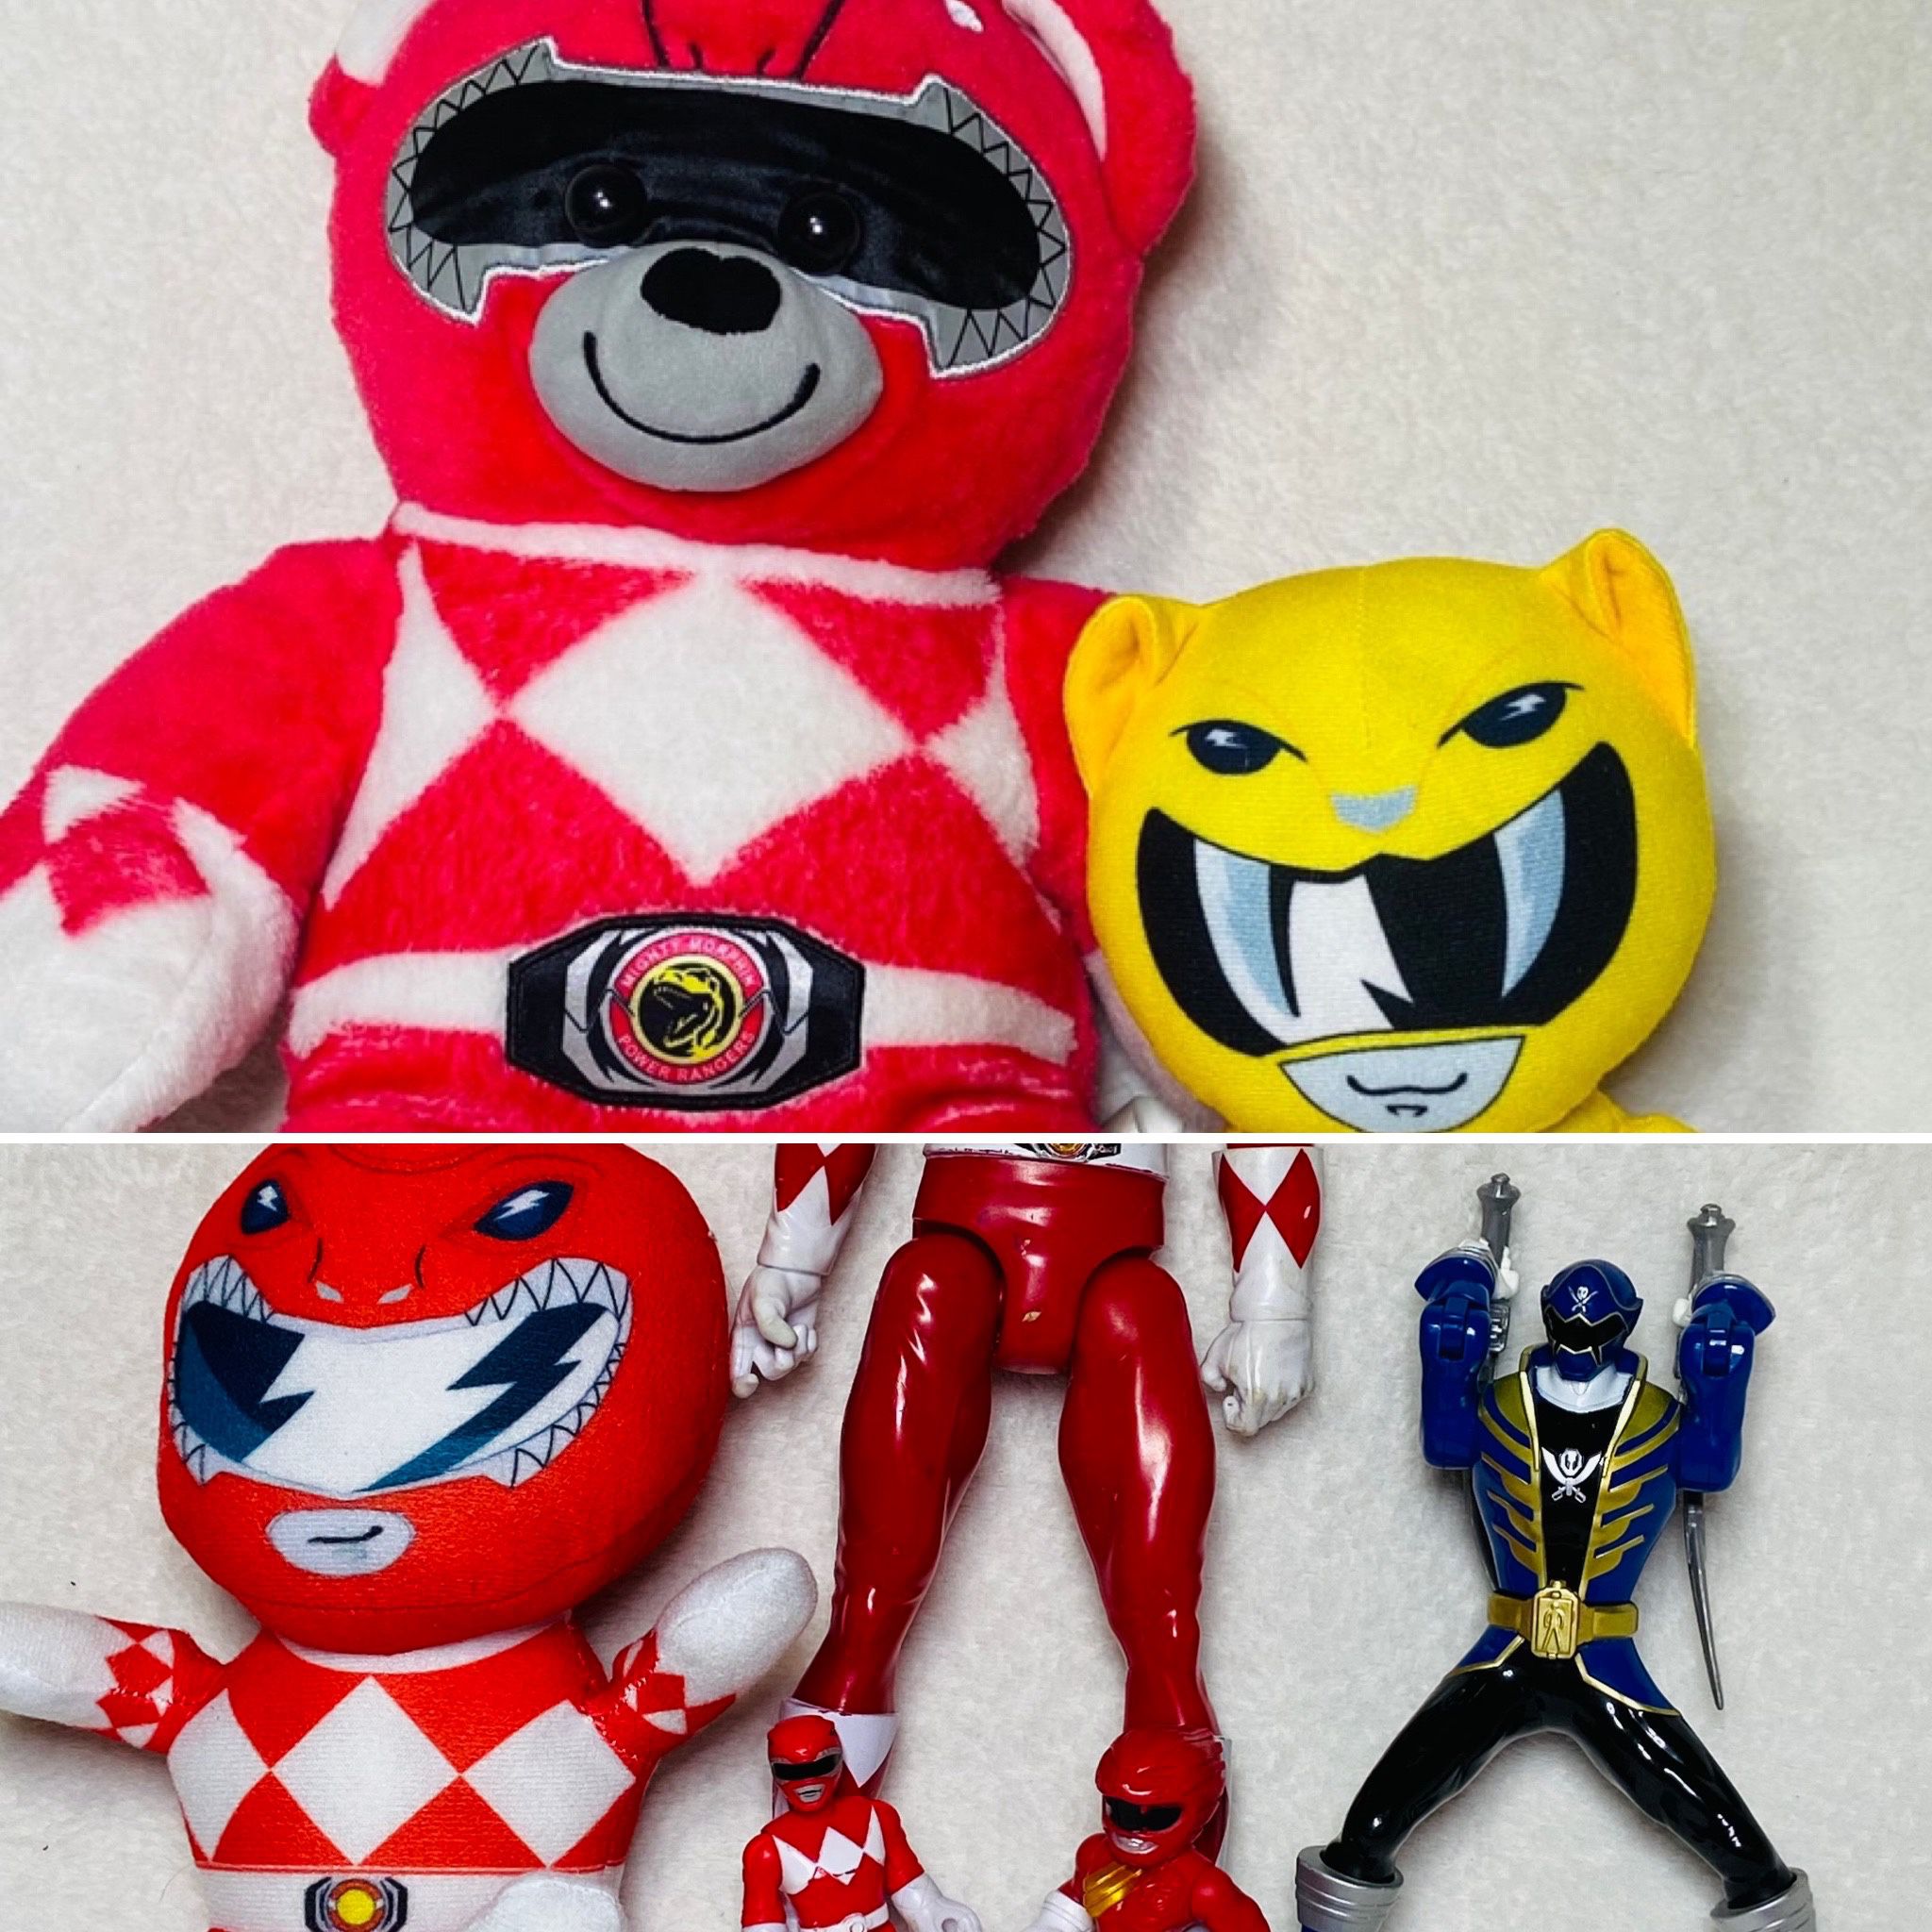 2017 Build A Bear Power Rangers Red Ranger Plush Teddy + Yellow Ranger Plush